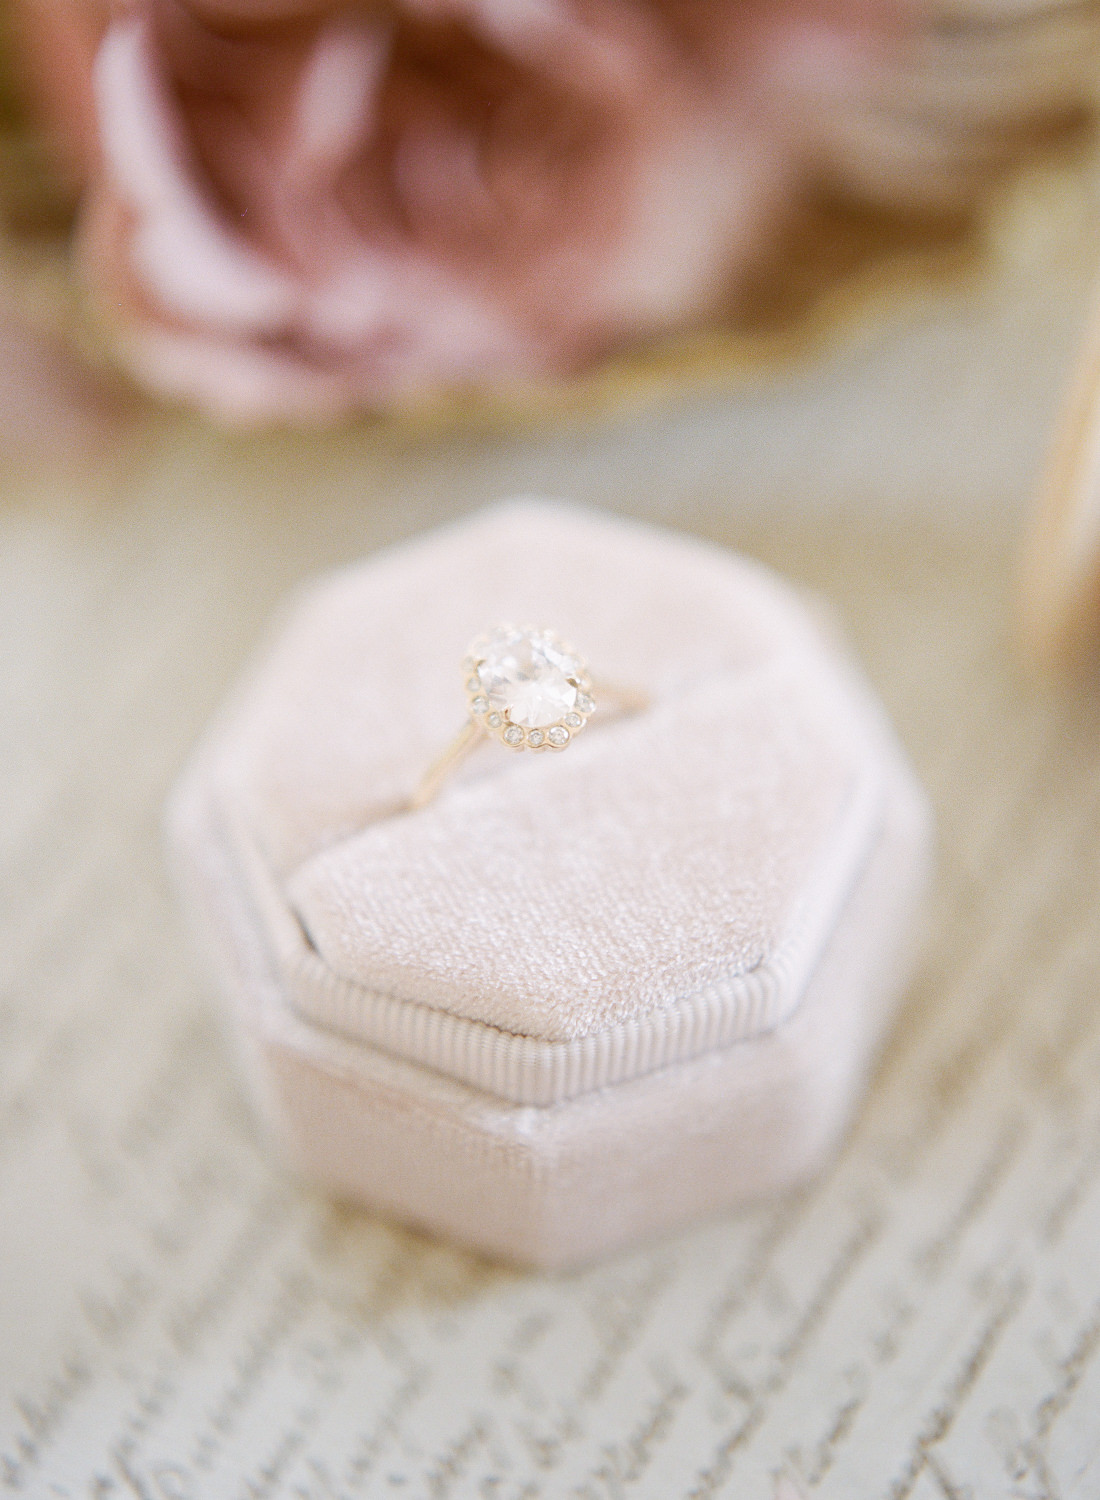 Diamond engagement ring in pink ring box